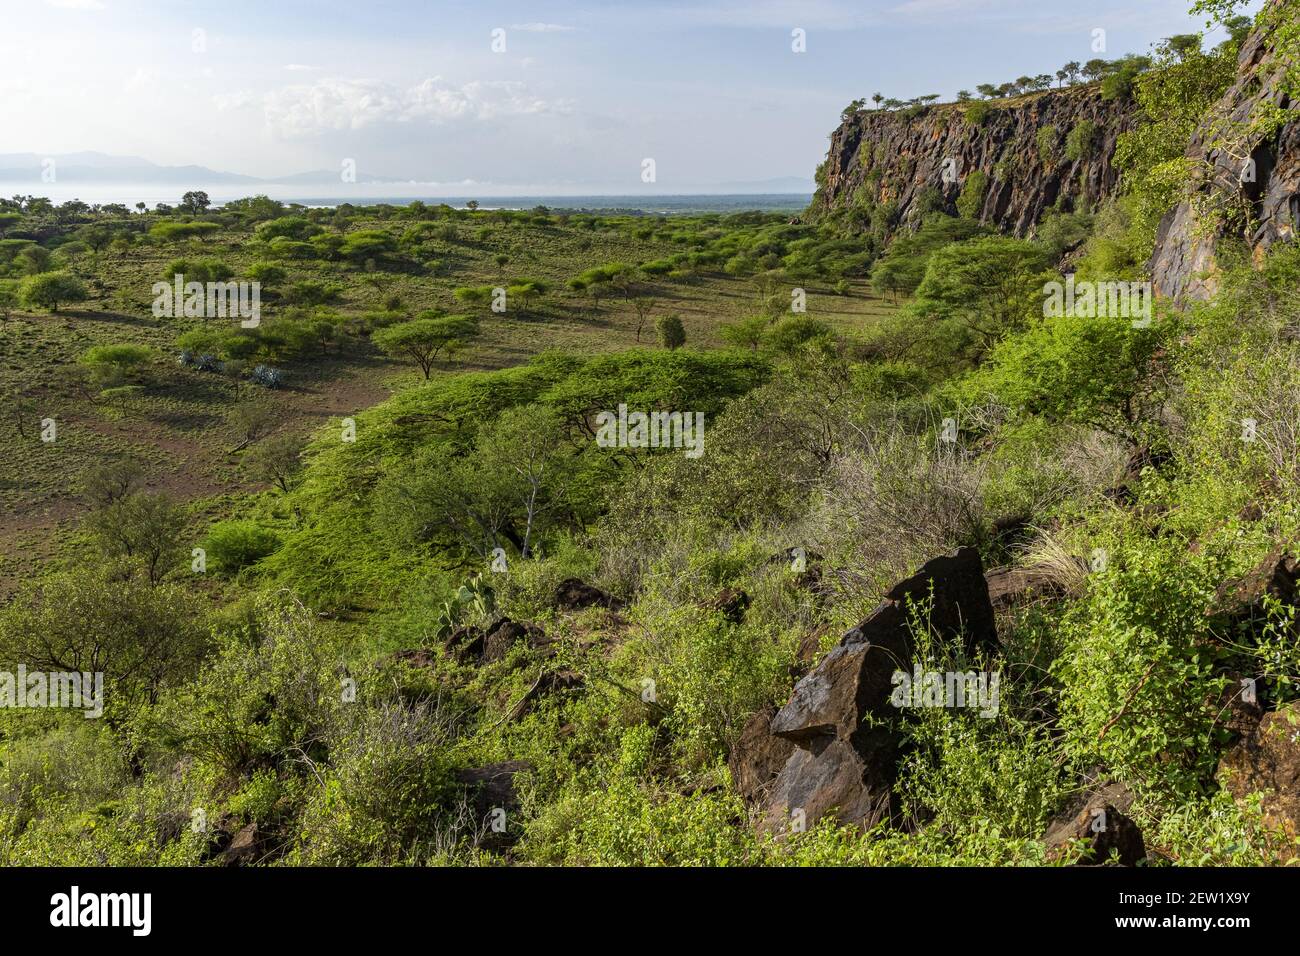 Kenya, around Lake Baringo, Rift fault Stock Photo